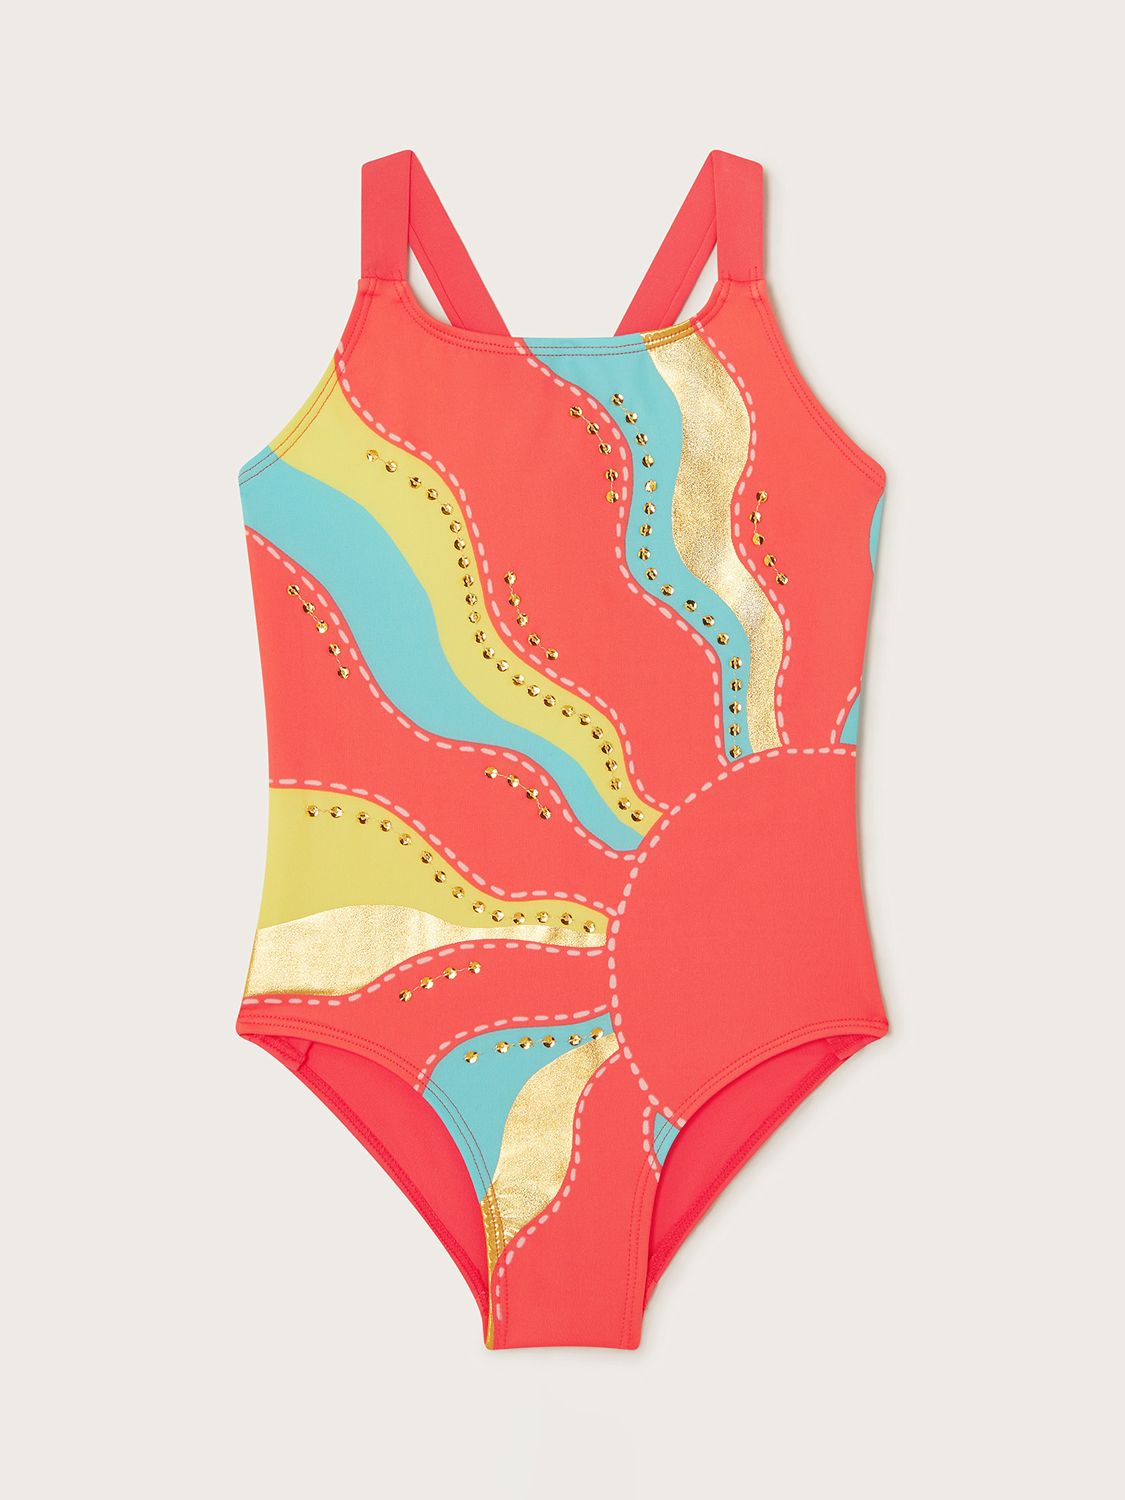 Monsoon Kids' Sunshine Sequin Swimsuit, Coral, 3-4 years